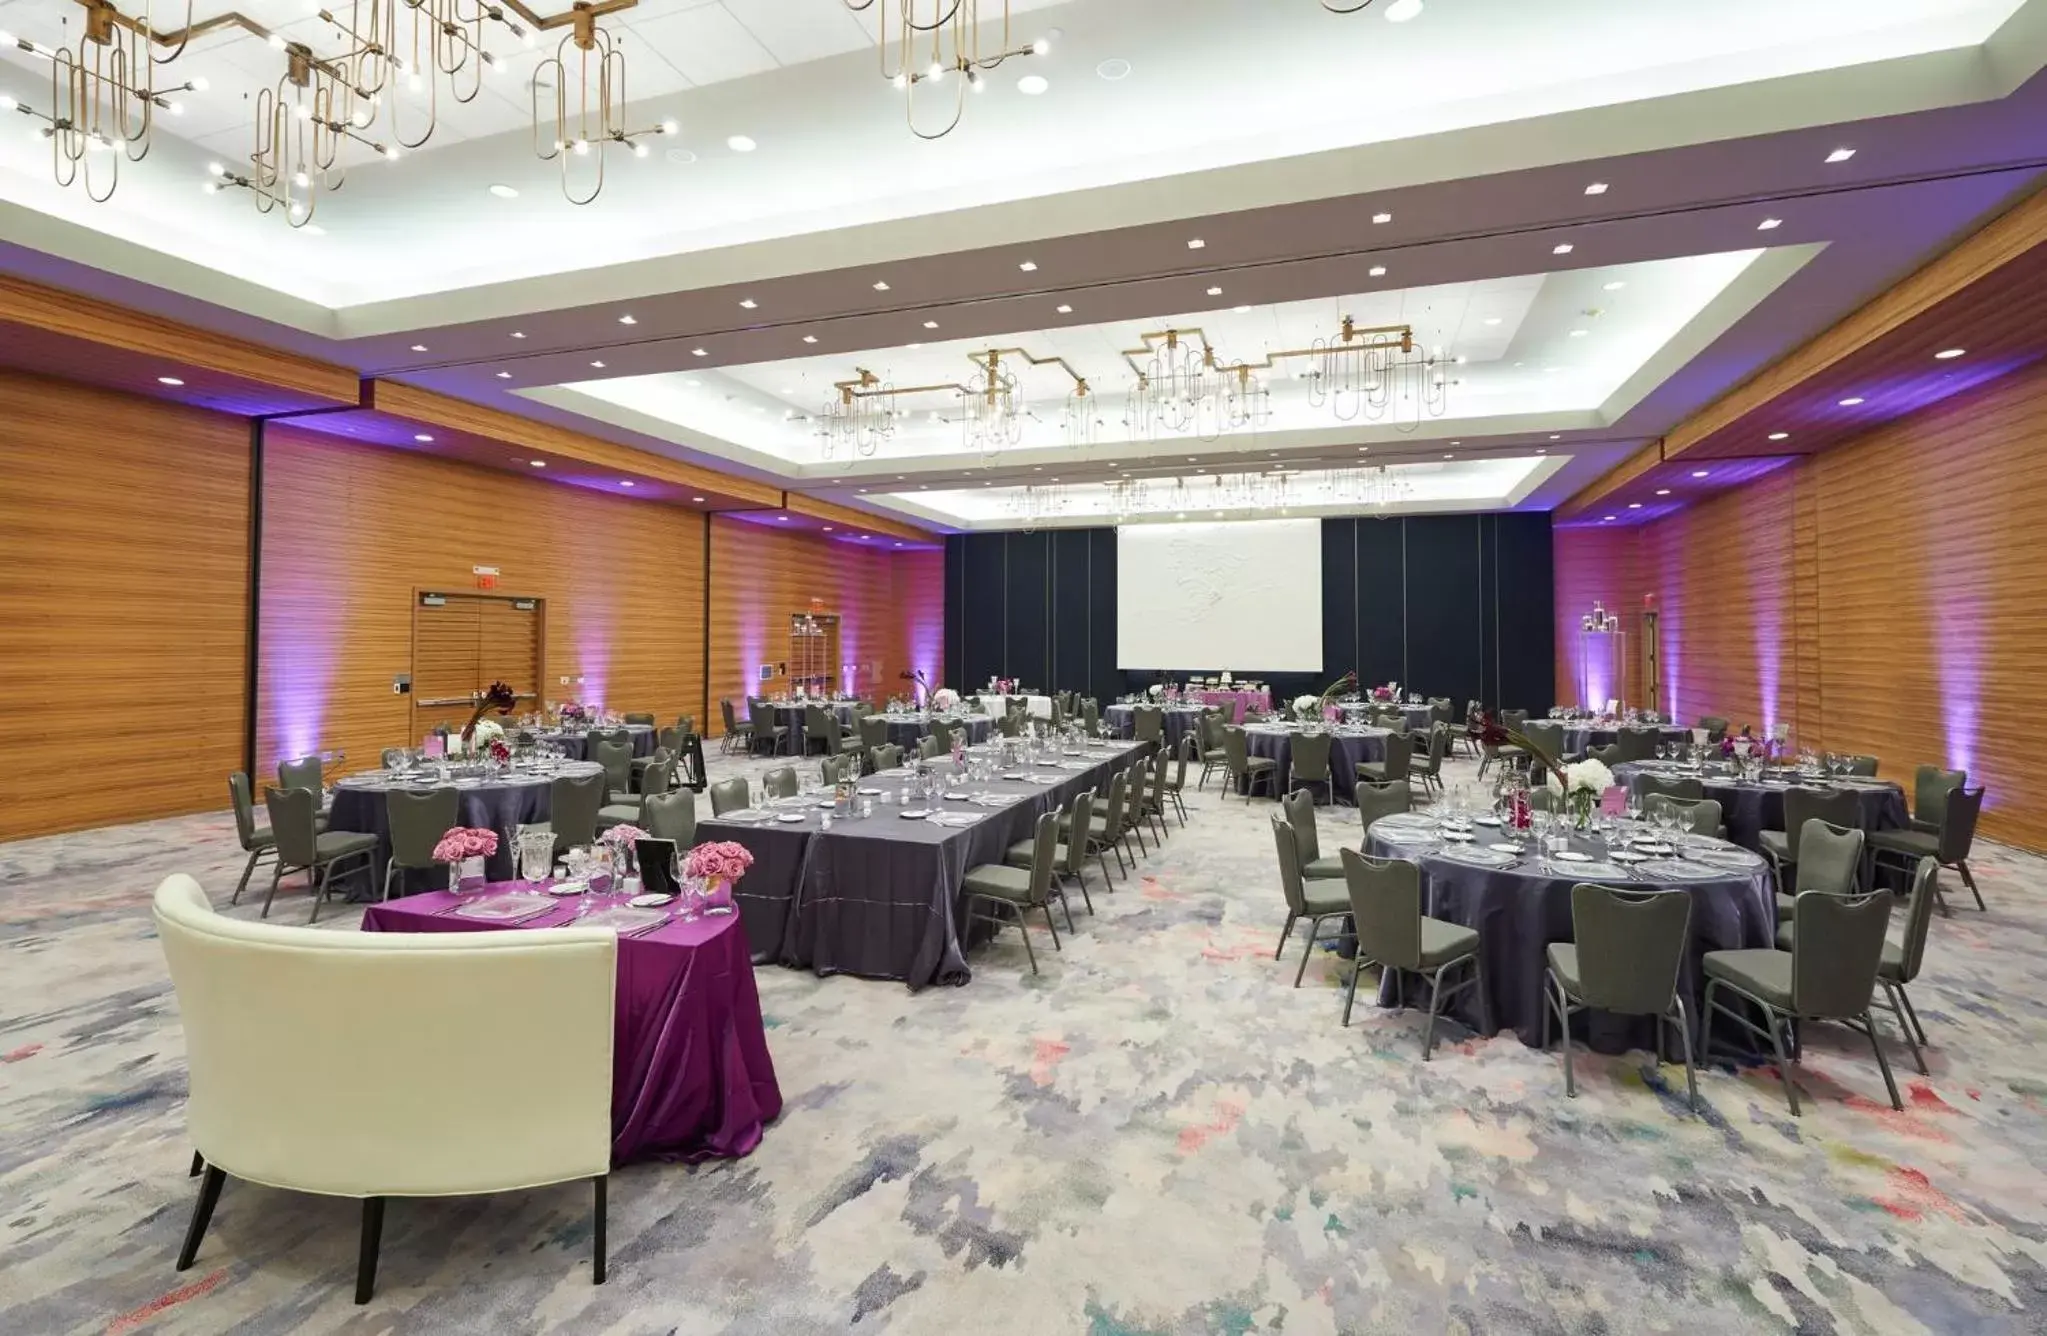 Banquet/Function facilities, Banquet Facilities in Loews Minneapolis Hotel